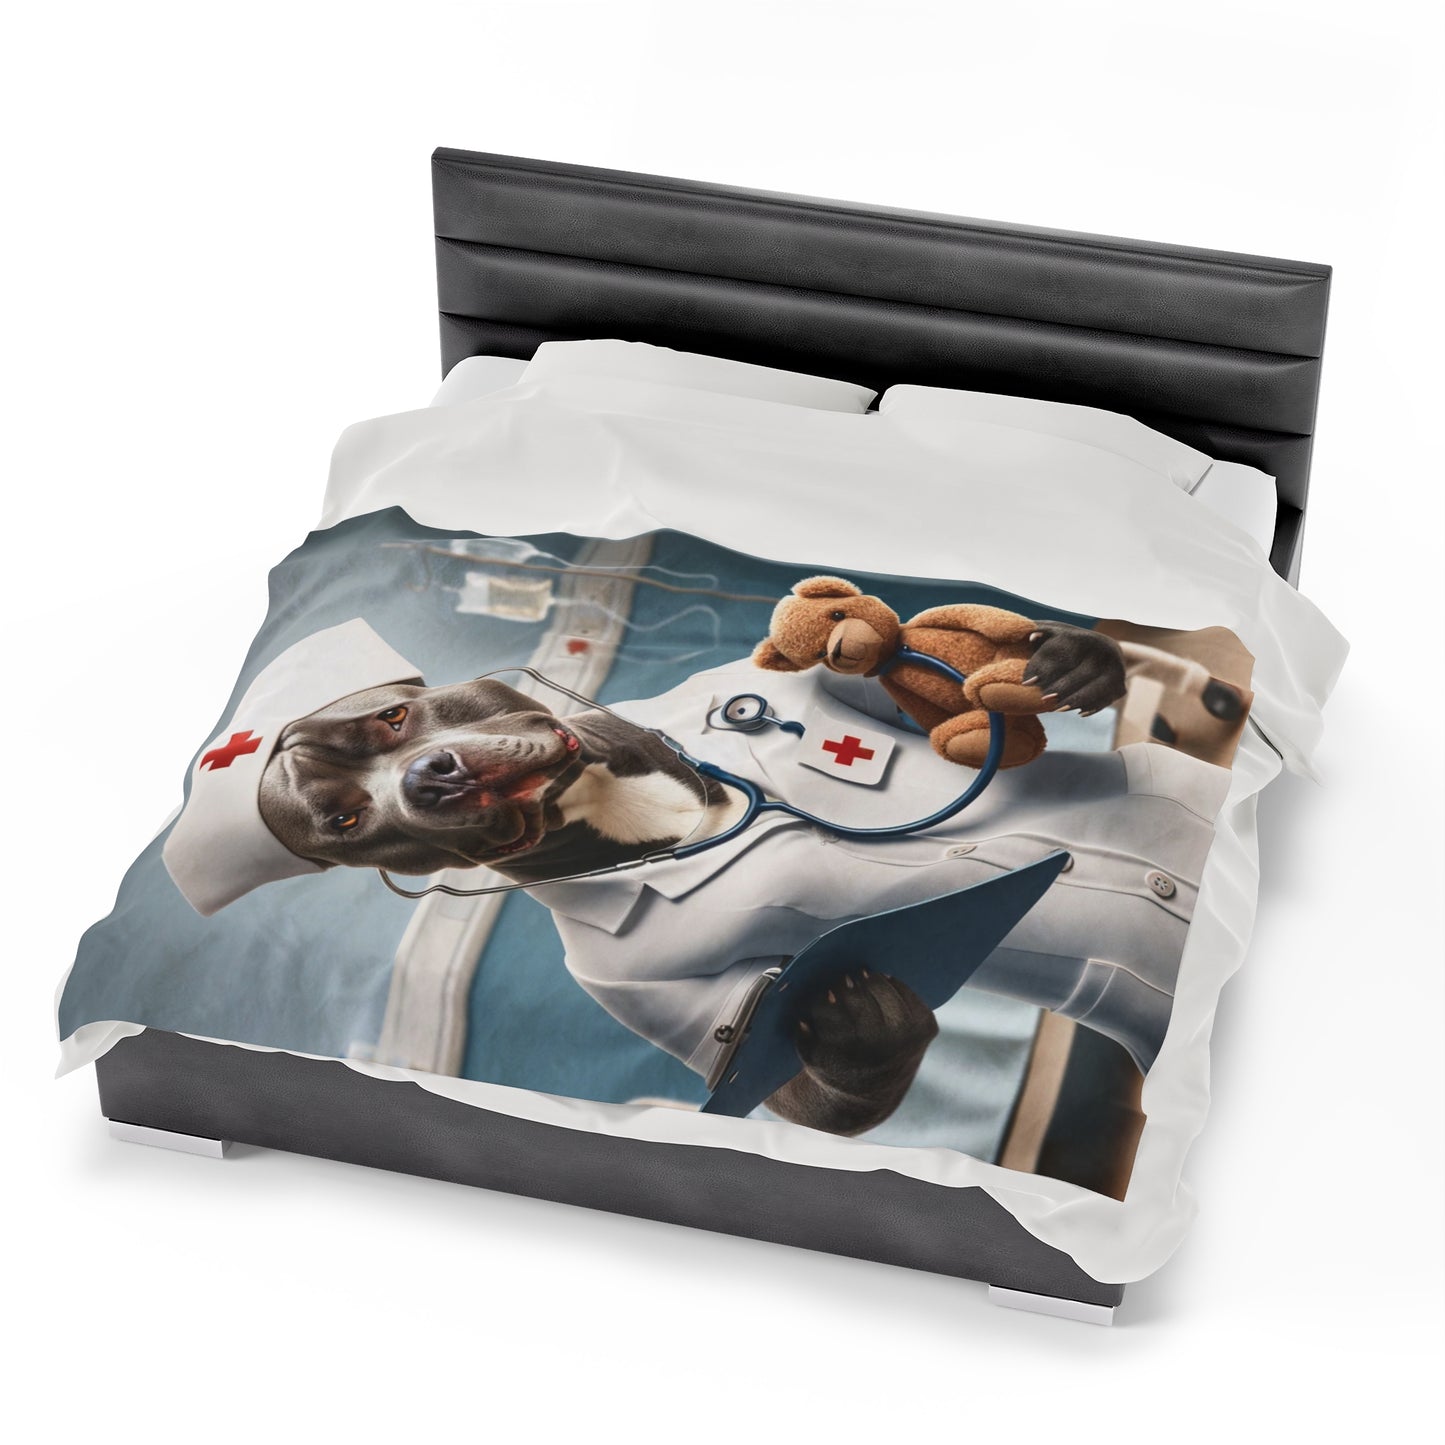 Cute Funny Nurse Doctor PitBull Dog Velveteen Plush Blanket, Dog themed bedding design, Beautiful Dog Cozy throw, Dog lovers kids Decor